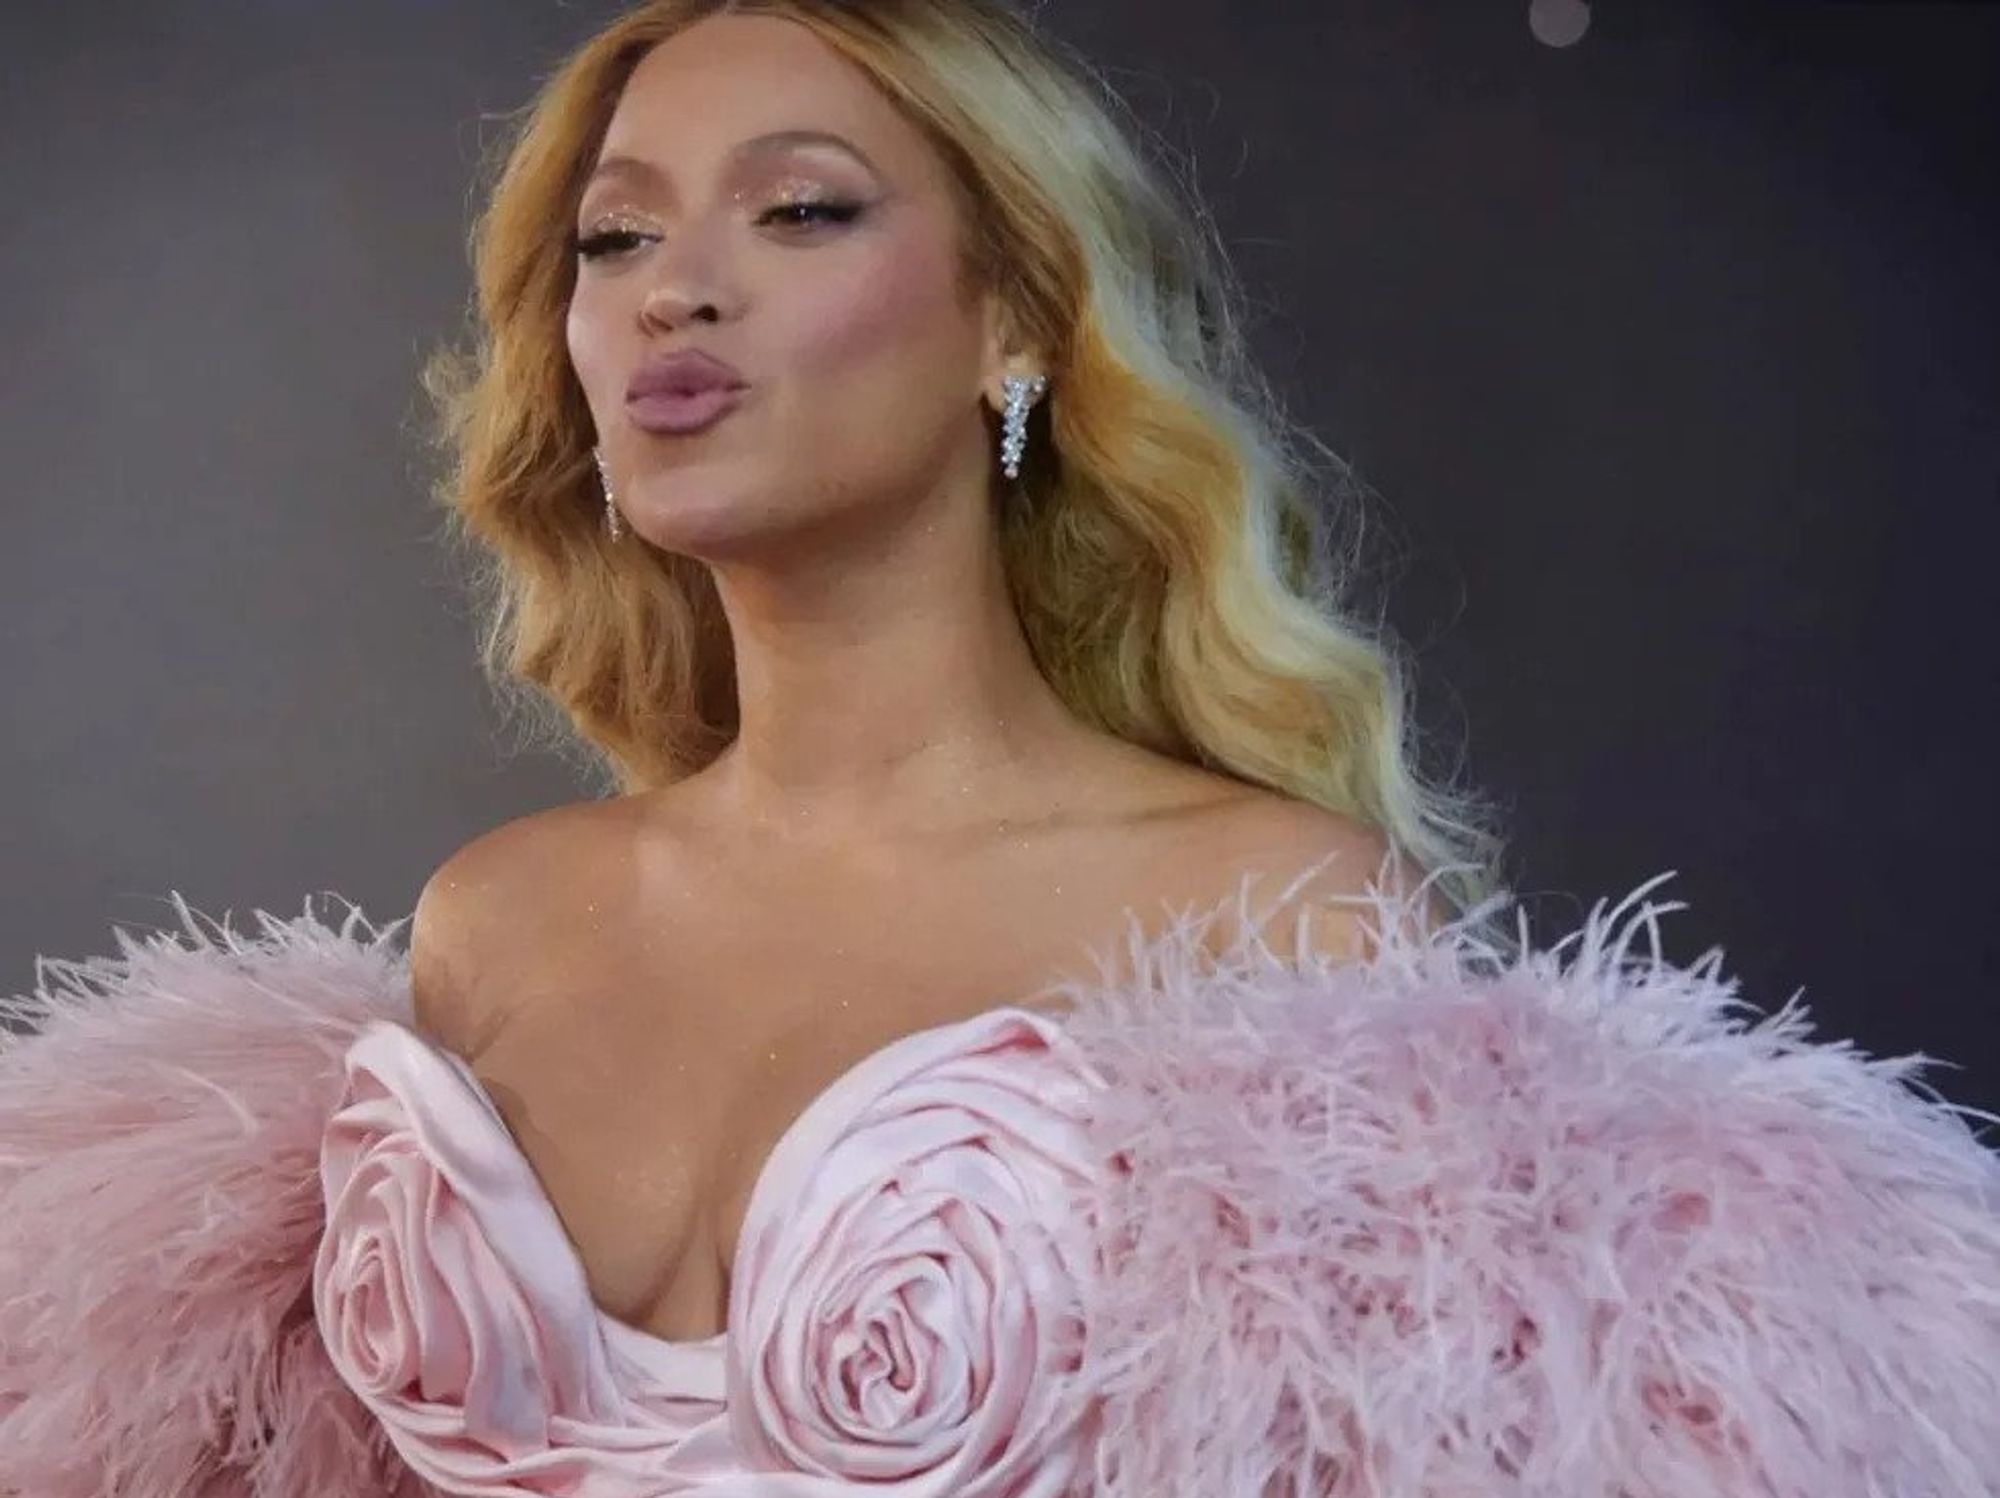  Beyoncé on stage in pink dress 